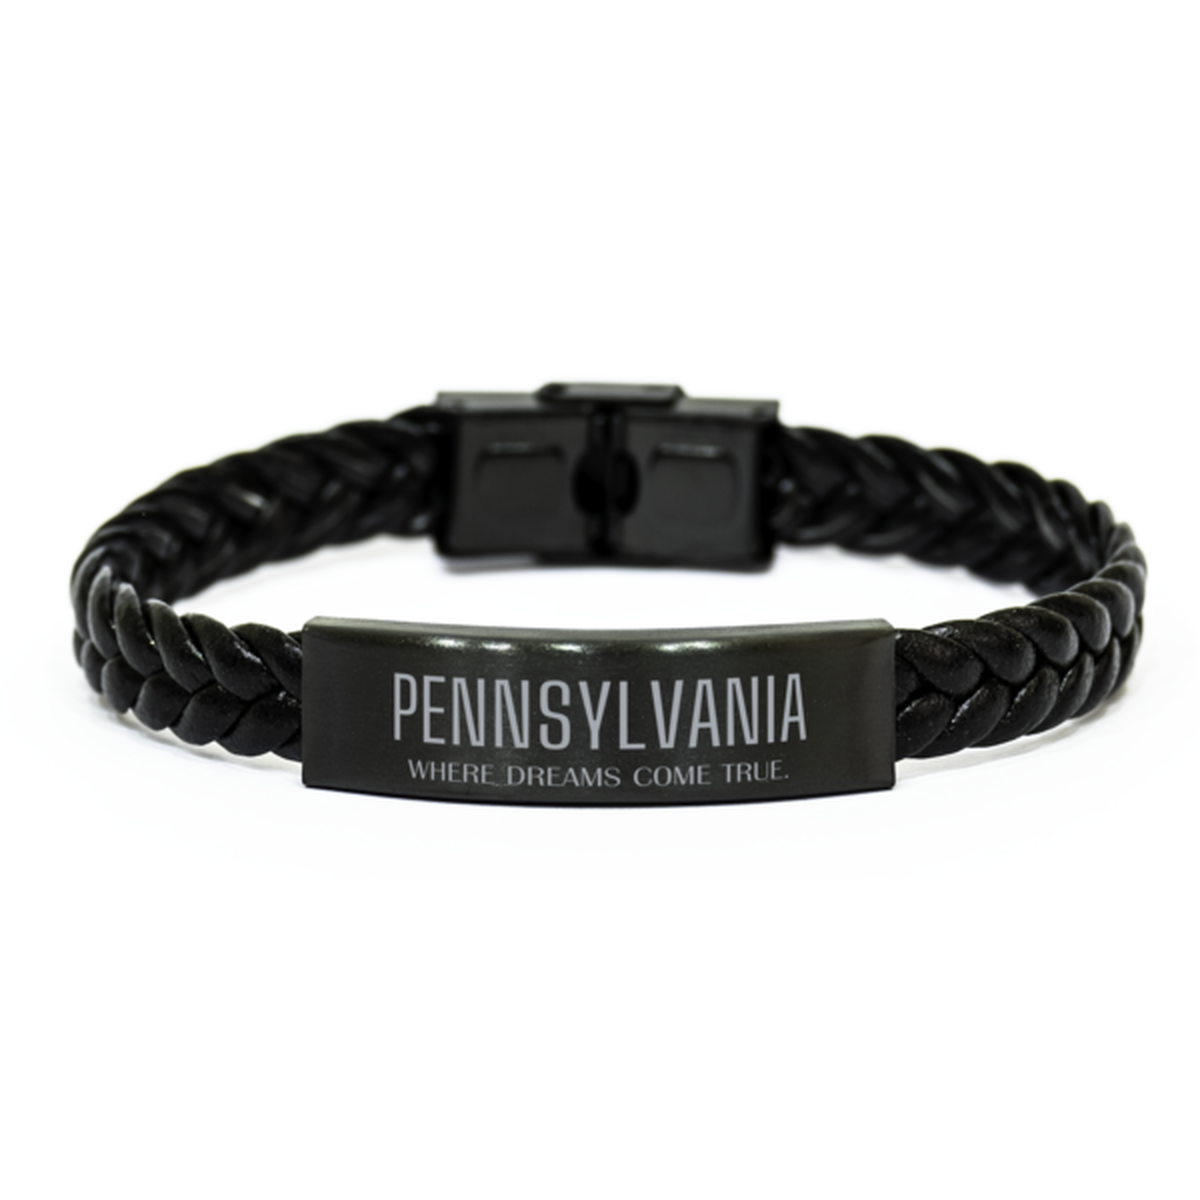 Love Pennsylvania State Braided Leather Bracelet, Pennsylvania Where dreams come true, Birthday Inspirational Gifts For Pennsylvania Men, Women, Friends